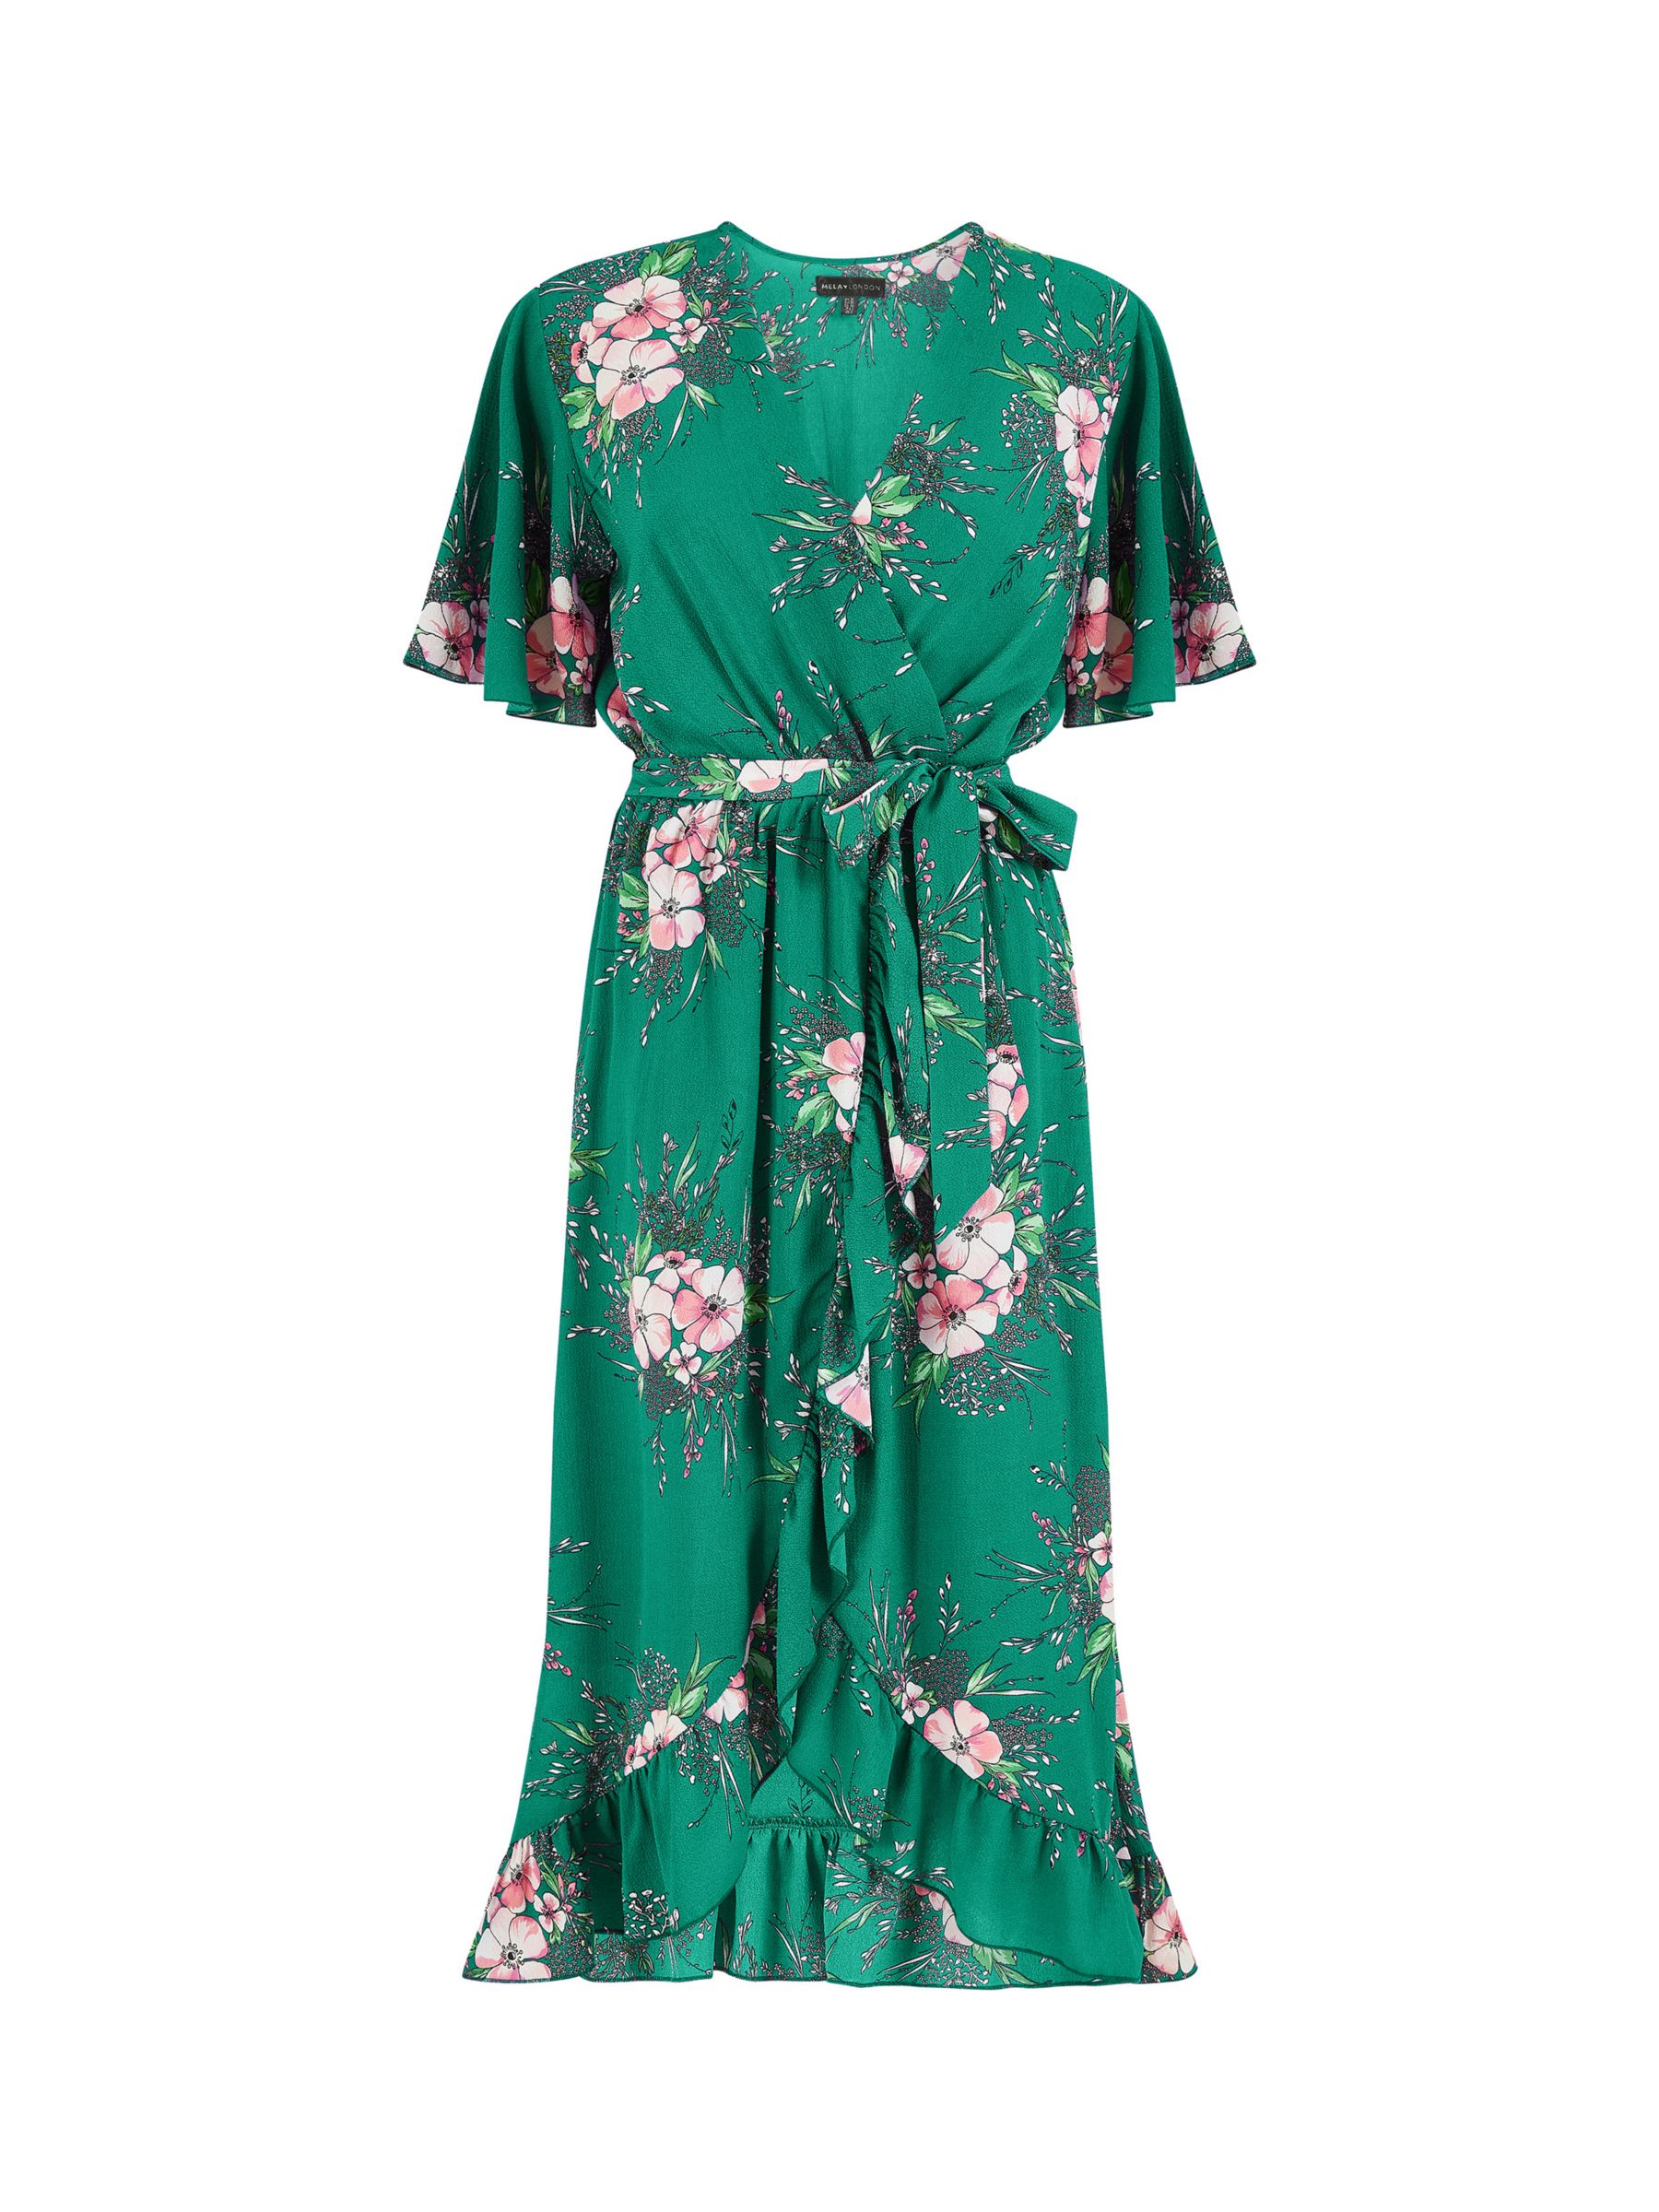 Mela London Floral Dip Hem Wrap Midi Dress, Green, 12